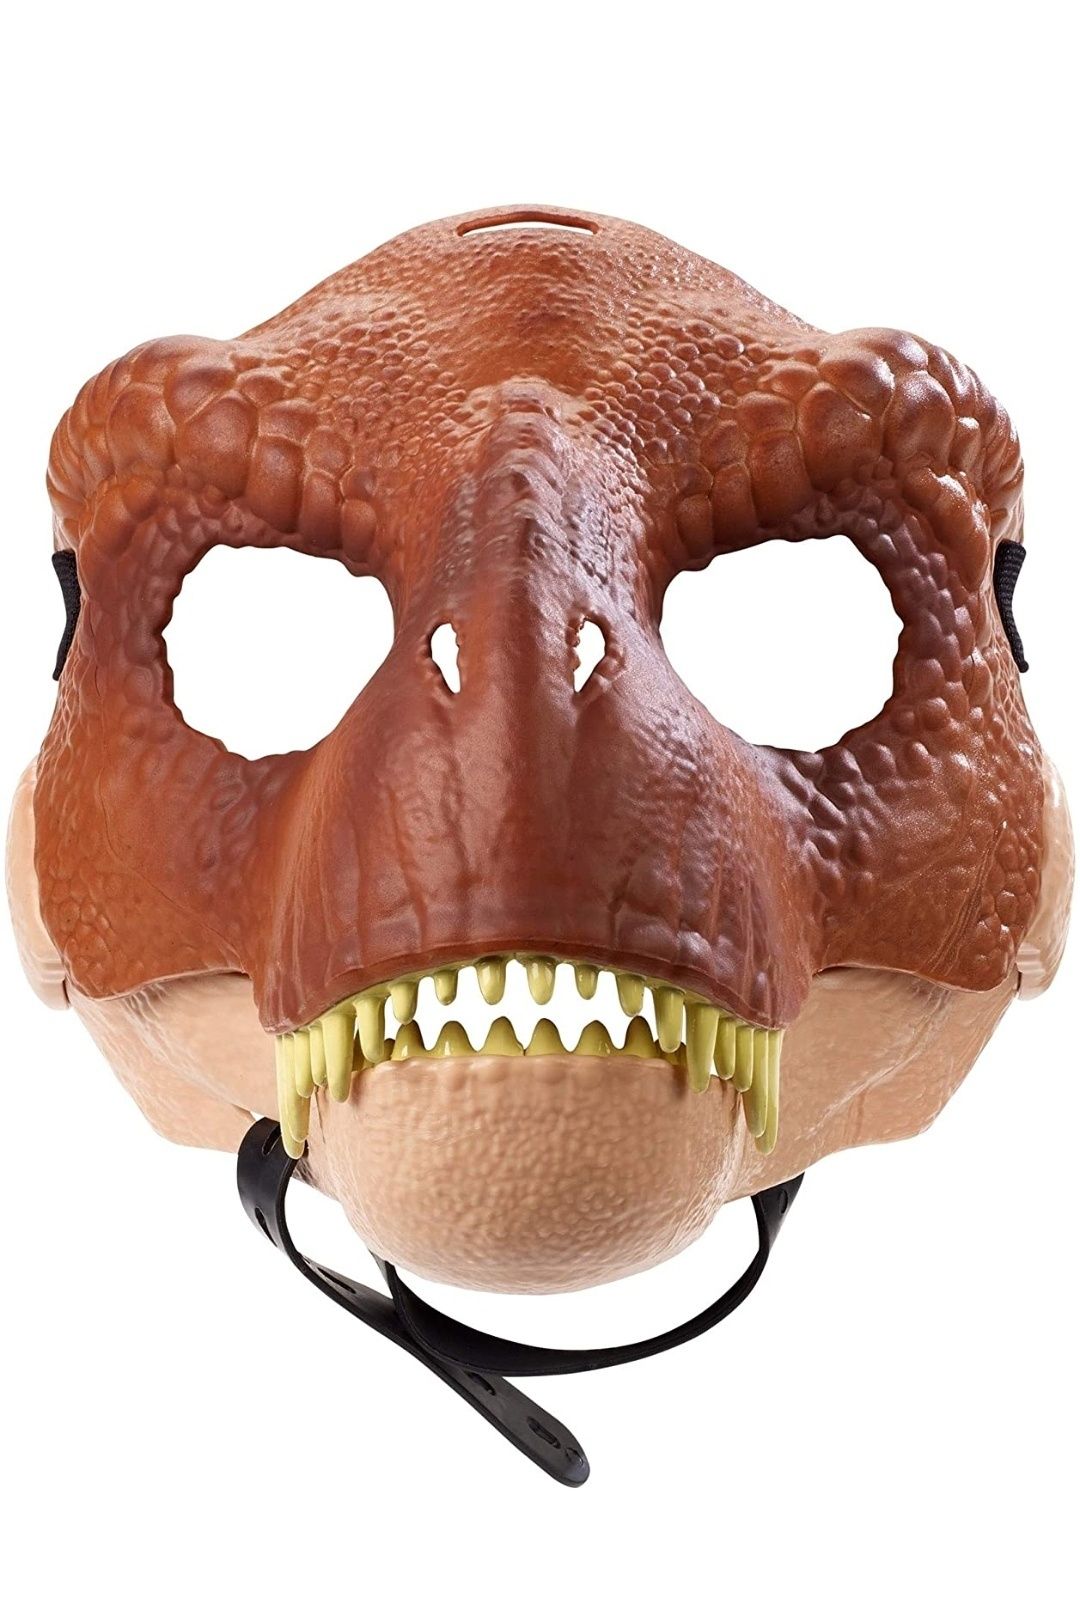 Jurassic park world T-rex маска тираннозавр Т-рекс динозавр